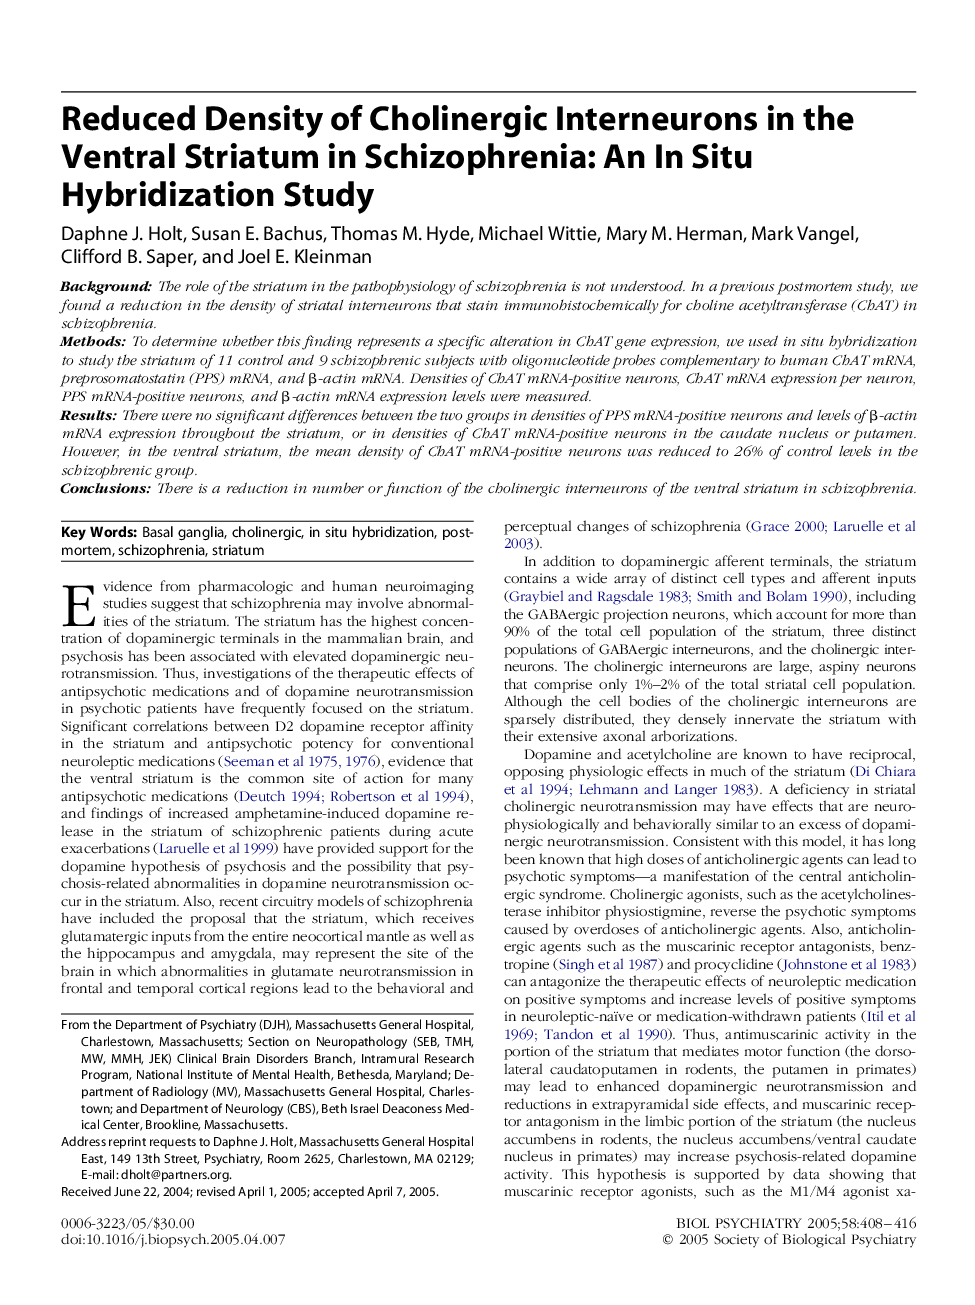 Reduced Density of Cholinergic Interneurons in the Ventral Striatum in Schizophrenia: An In Situ Hybridization Study